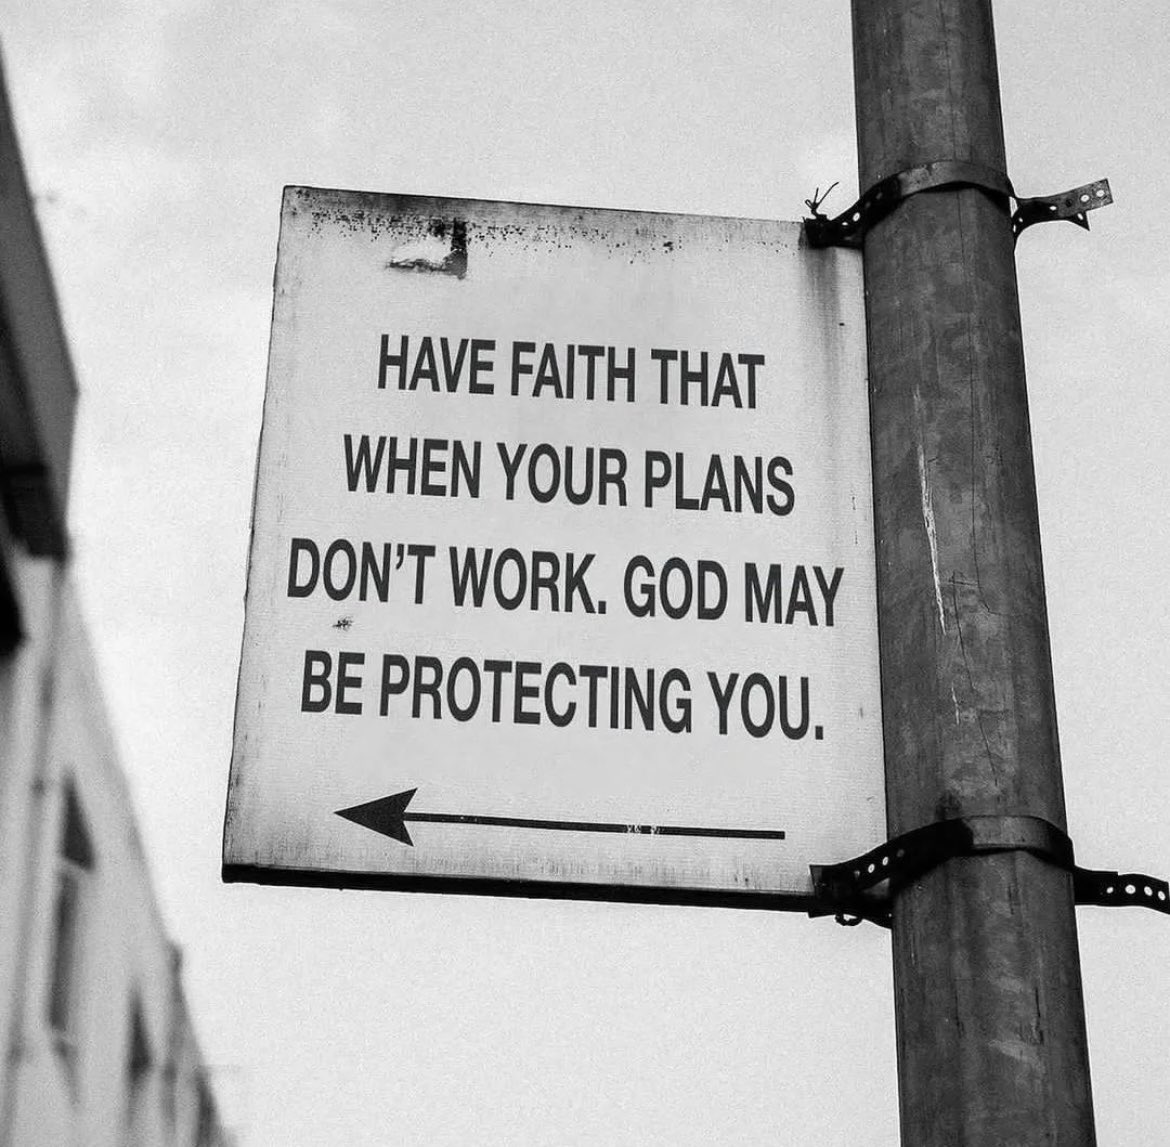 Amen 🙏